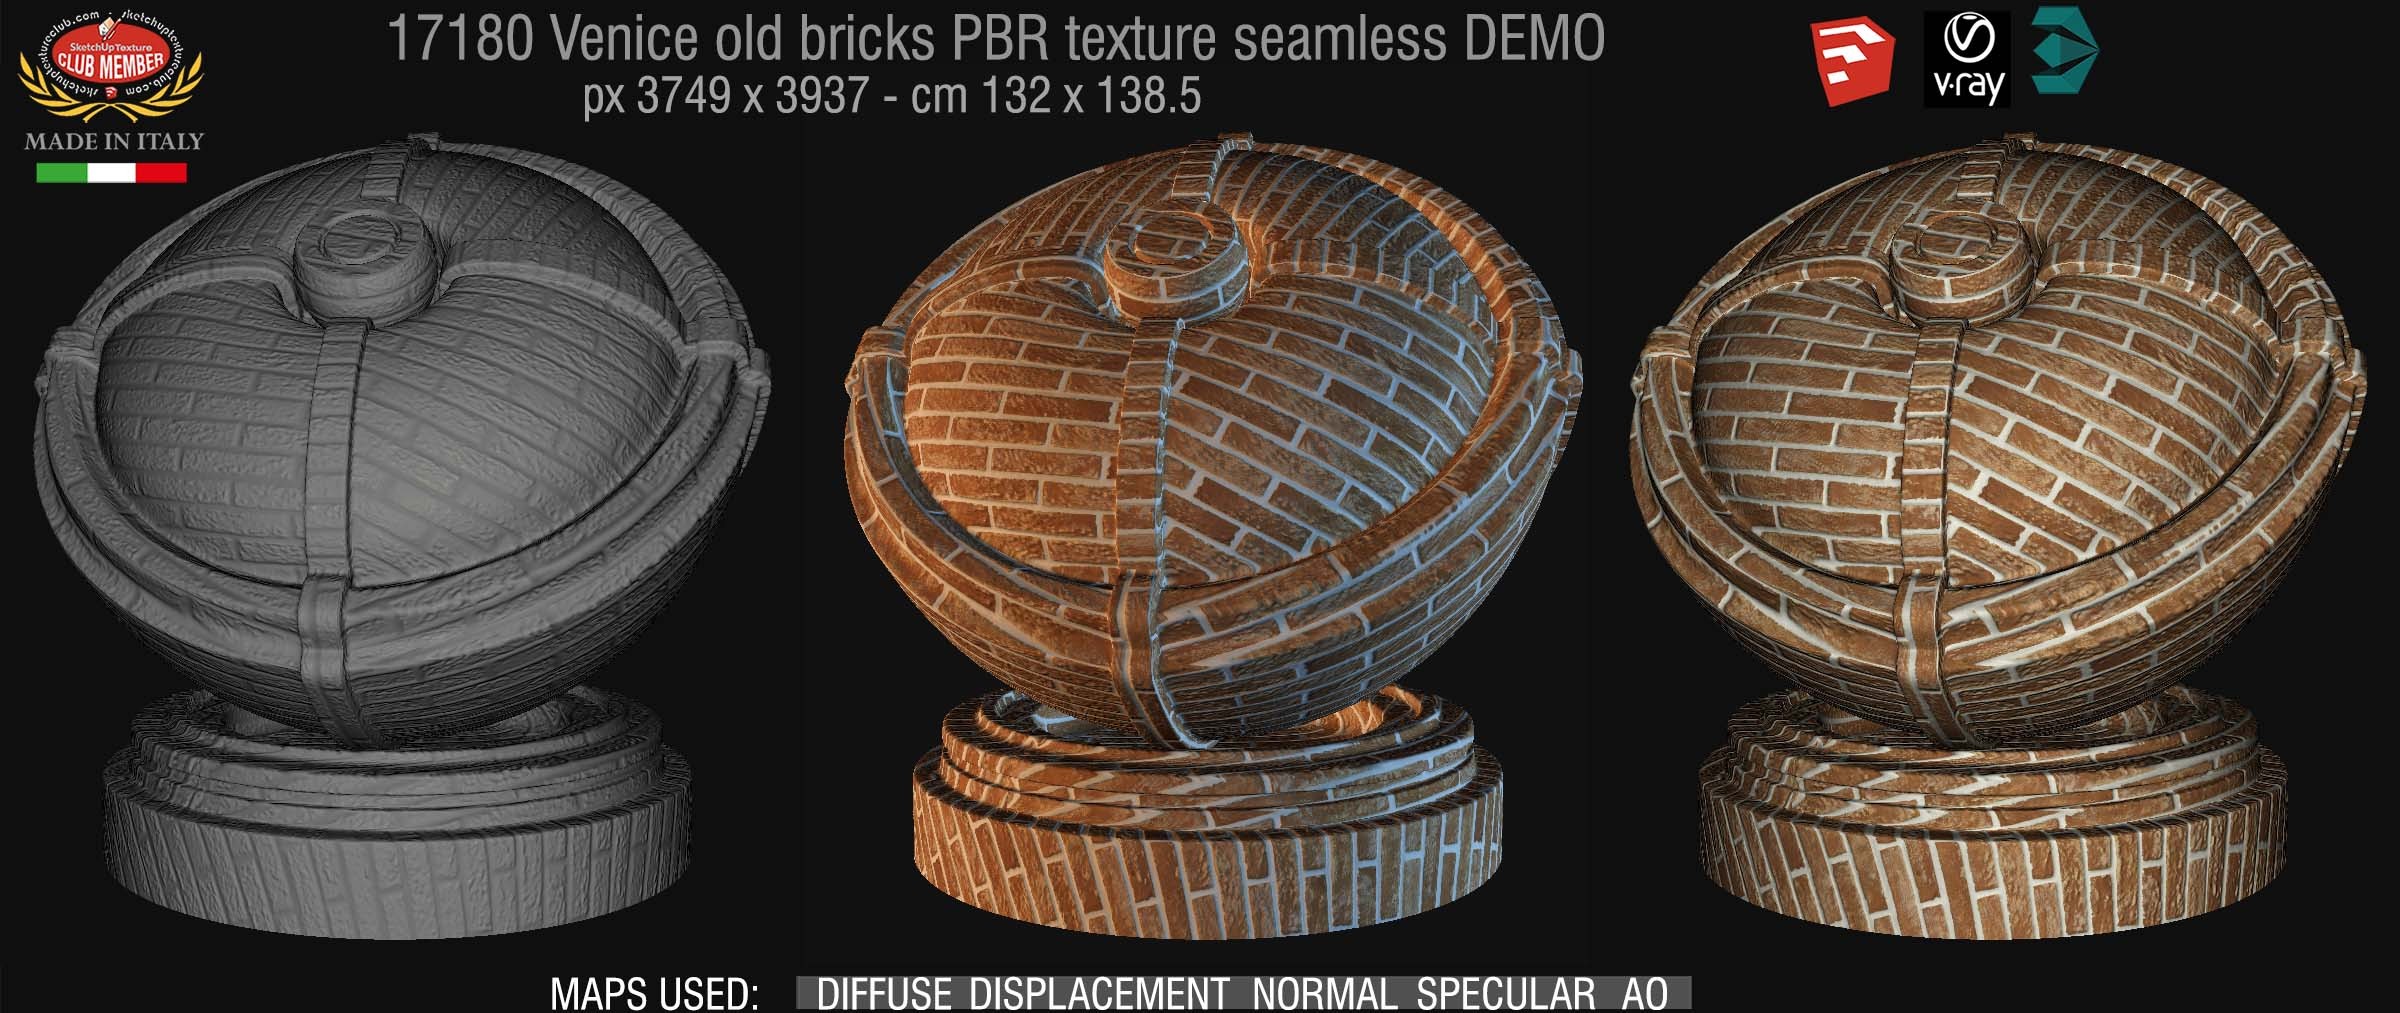 17180 Venice old bricks PBR texture seamless DEMO